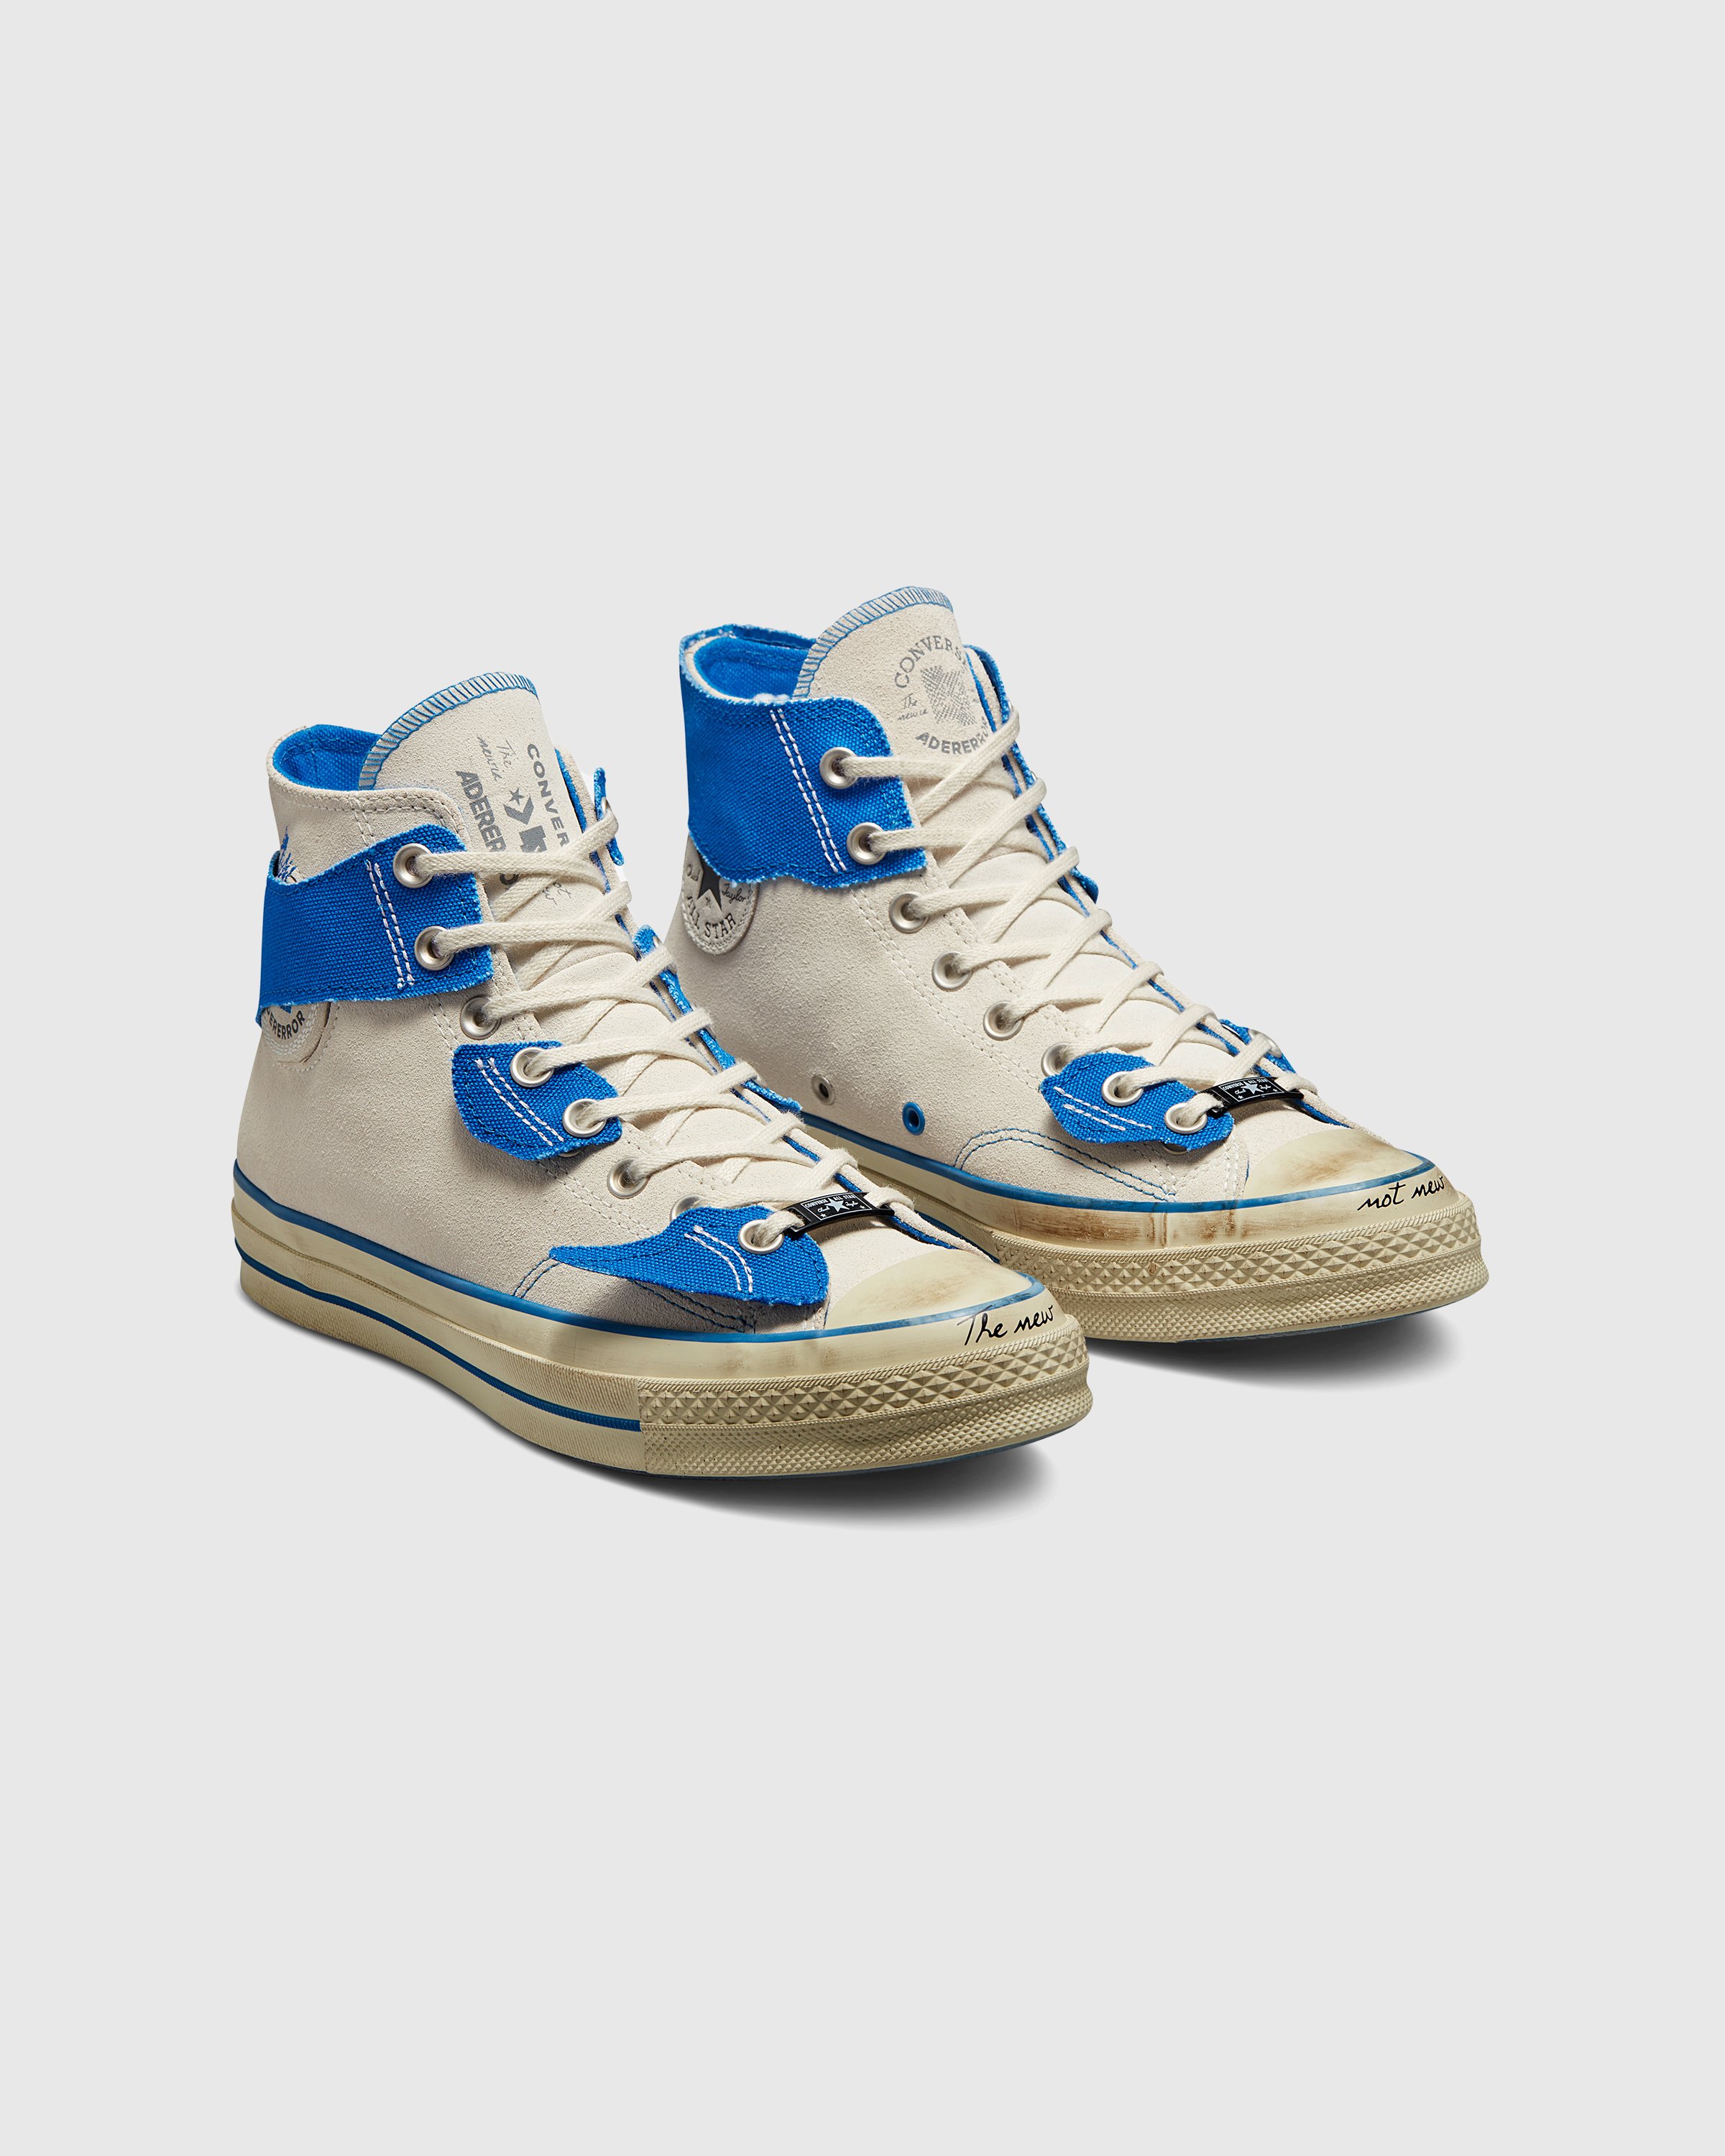 Converse x Ader Error - Chuck 70 Hi White/Imperial Blue/Black - Footwear - White - Image 3